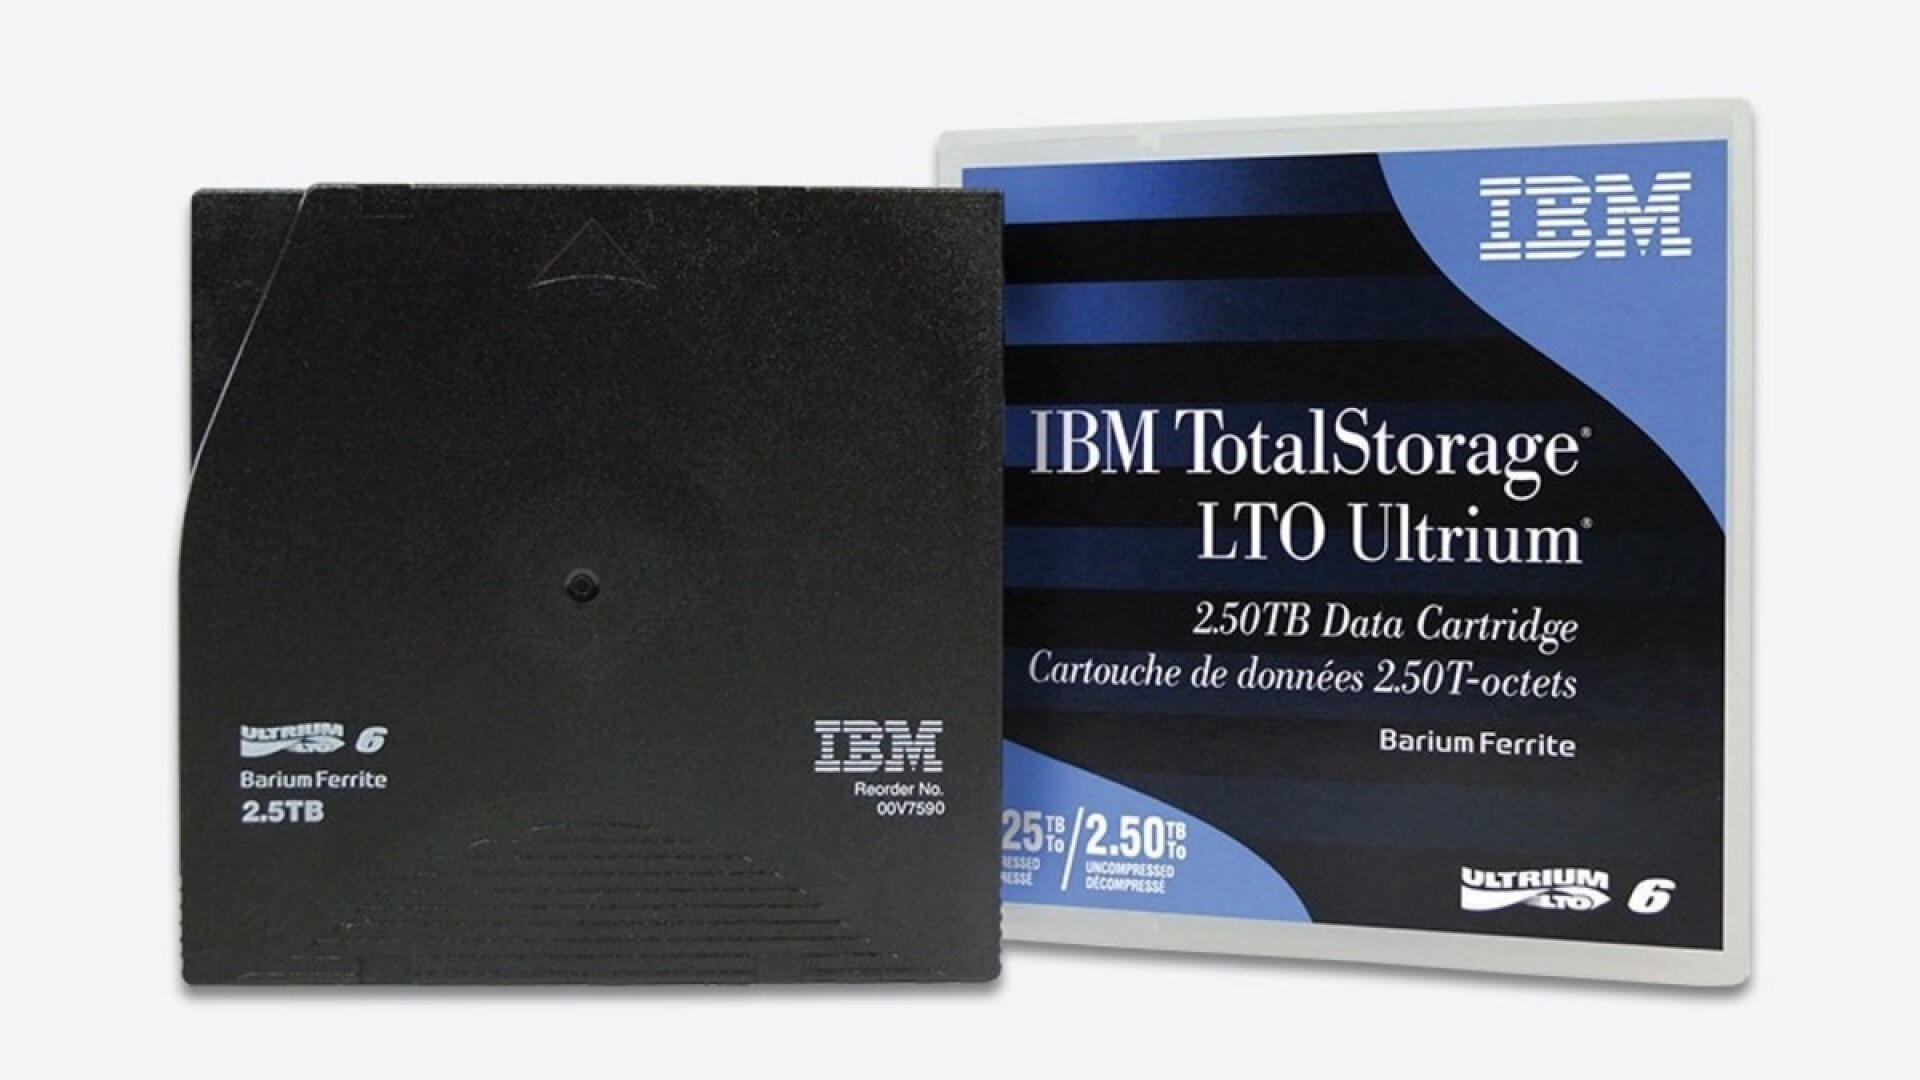 IBM CINTA ULTRIUM LTO 6 00V7590 - 2254 